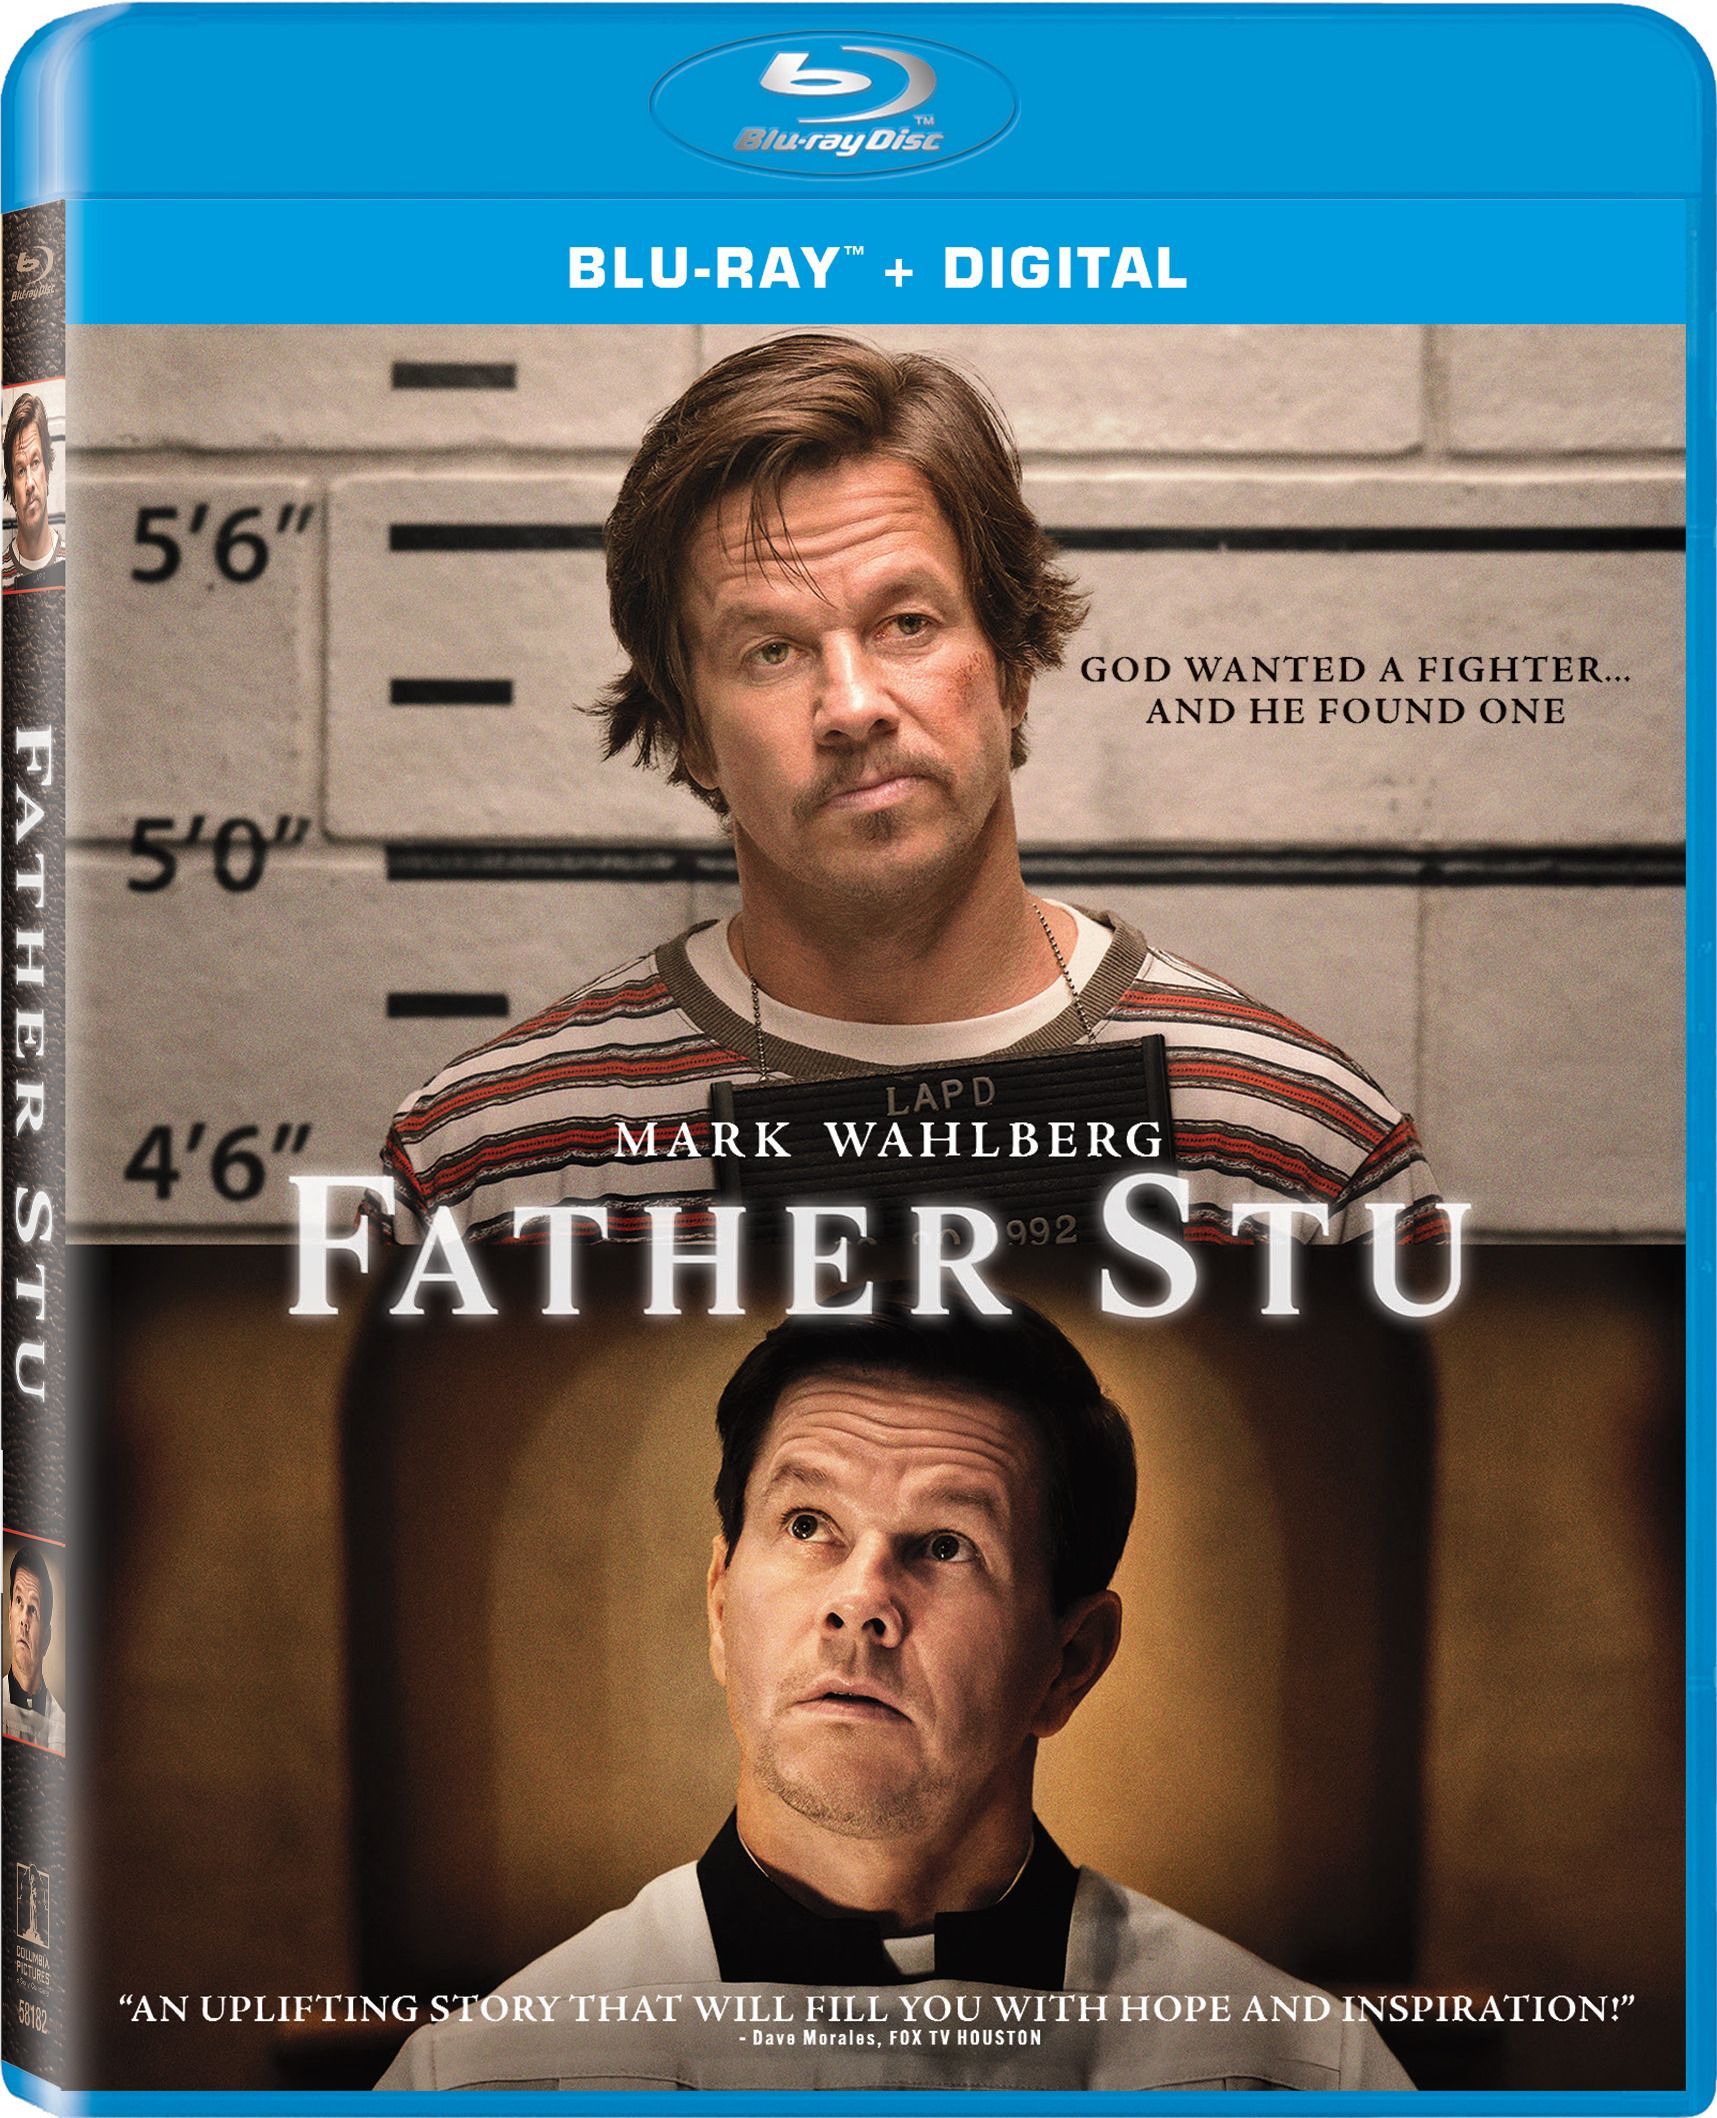 FATHER STU Blu ray FrontLeft